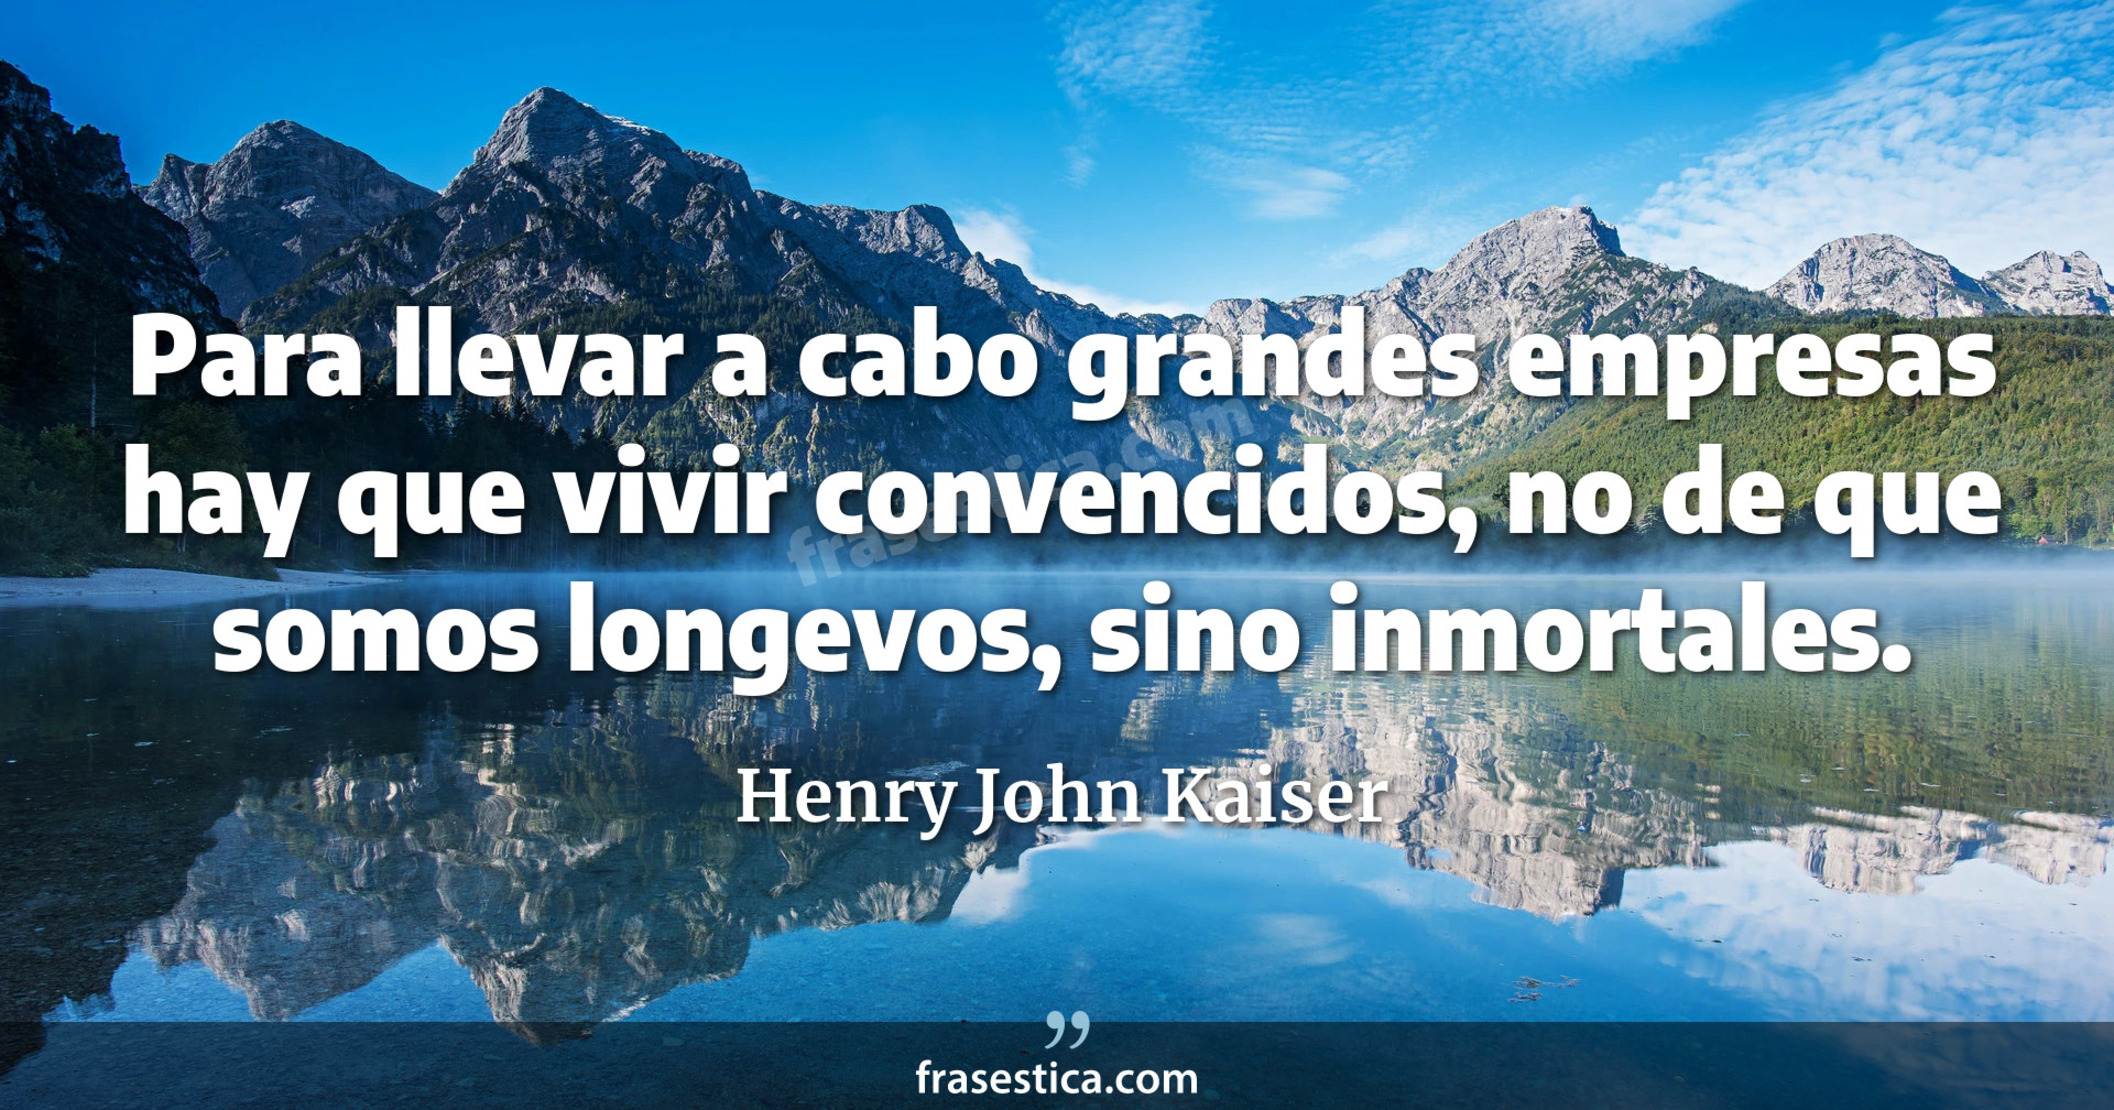 Para llevar a cabo grandes empresas hay que vivir convencidos, no de que somos longevos, sino inmortales. - Henry John Kaiser